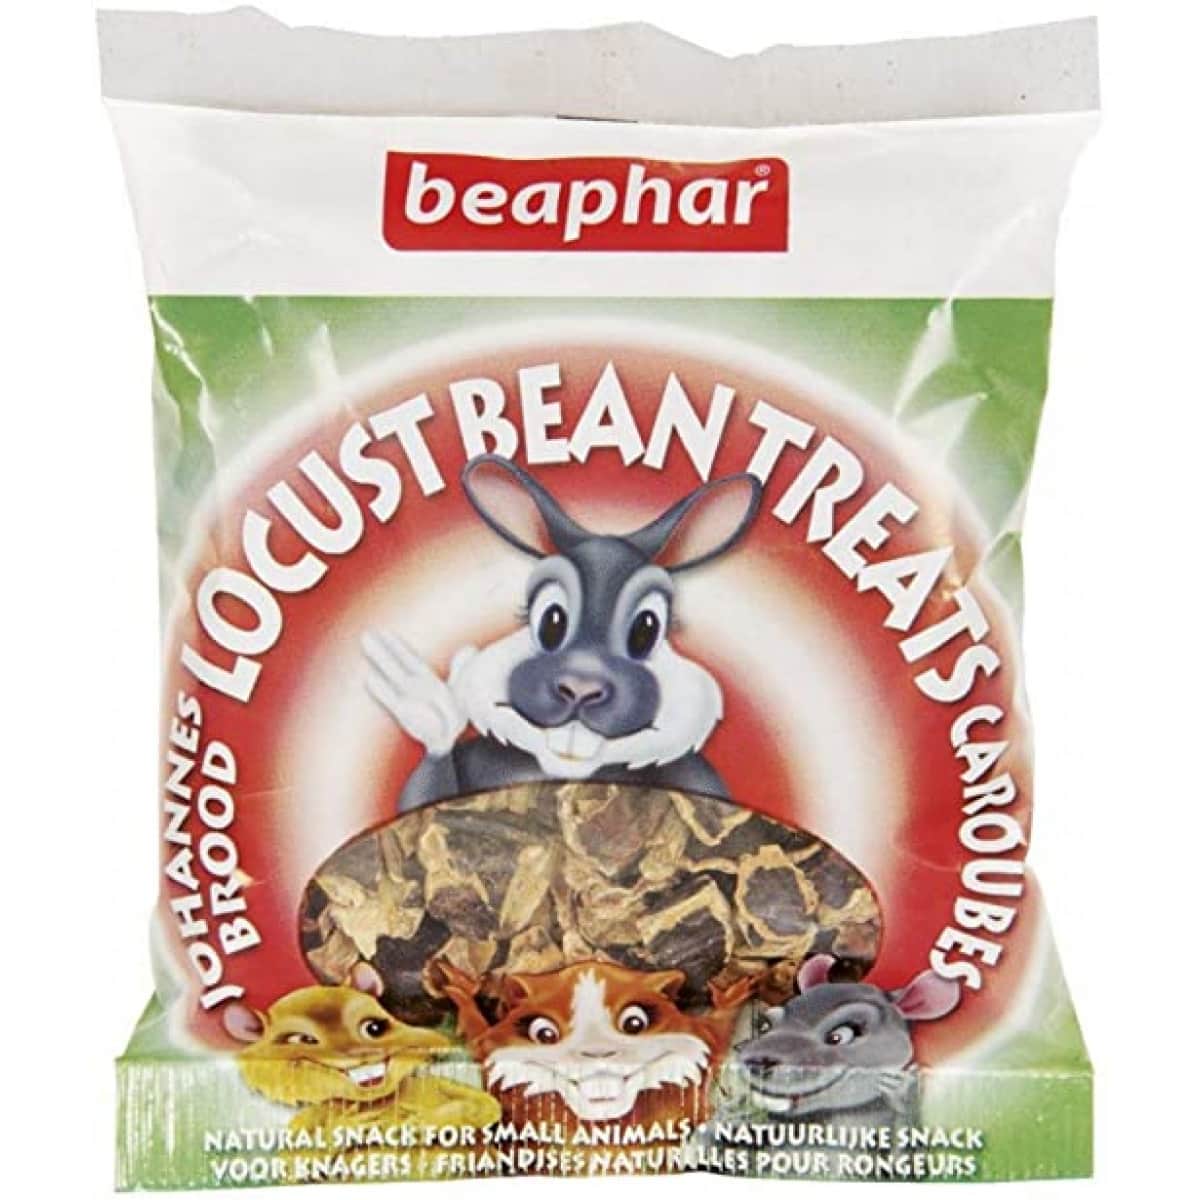 Beaphar - Locust Bean Treats 85g Main Image